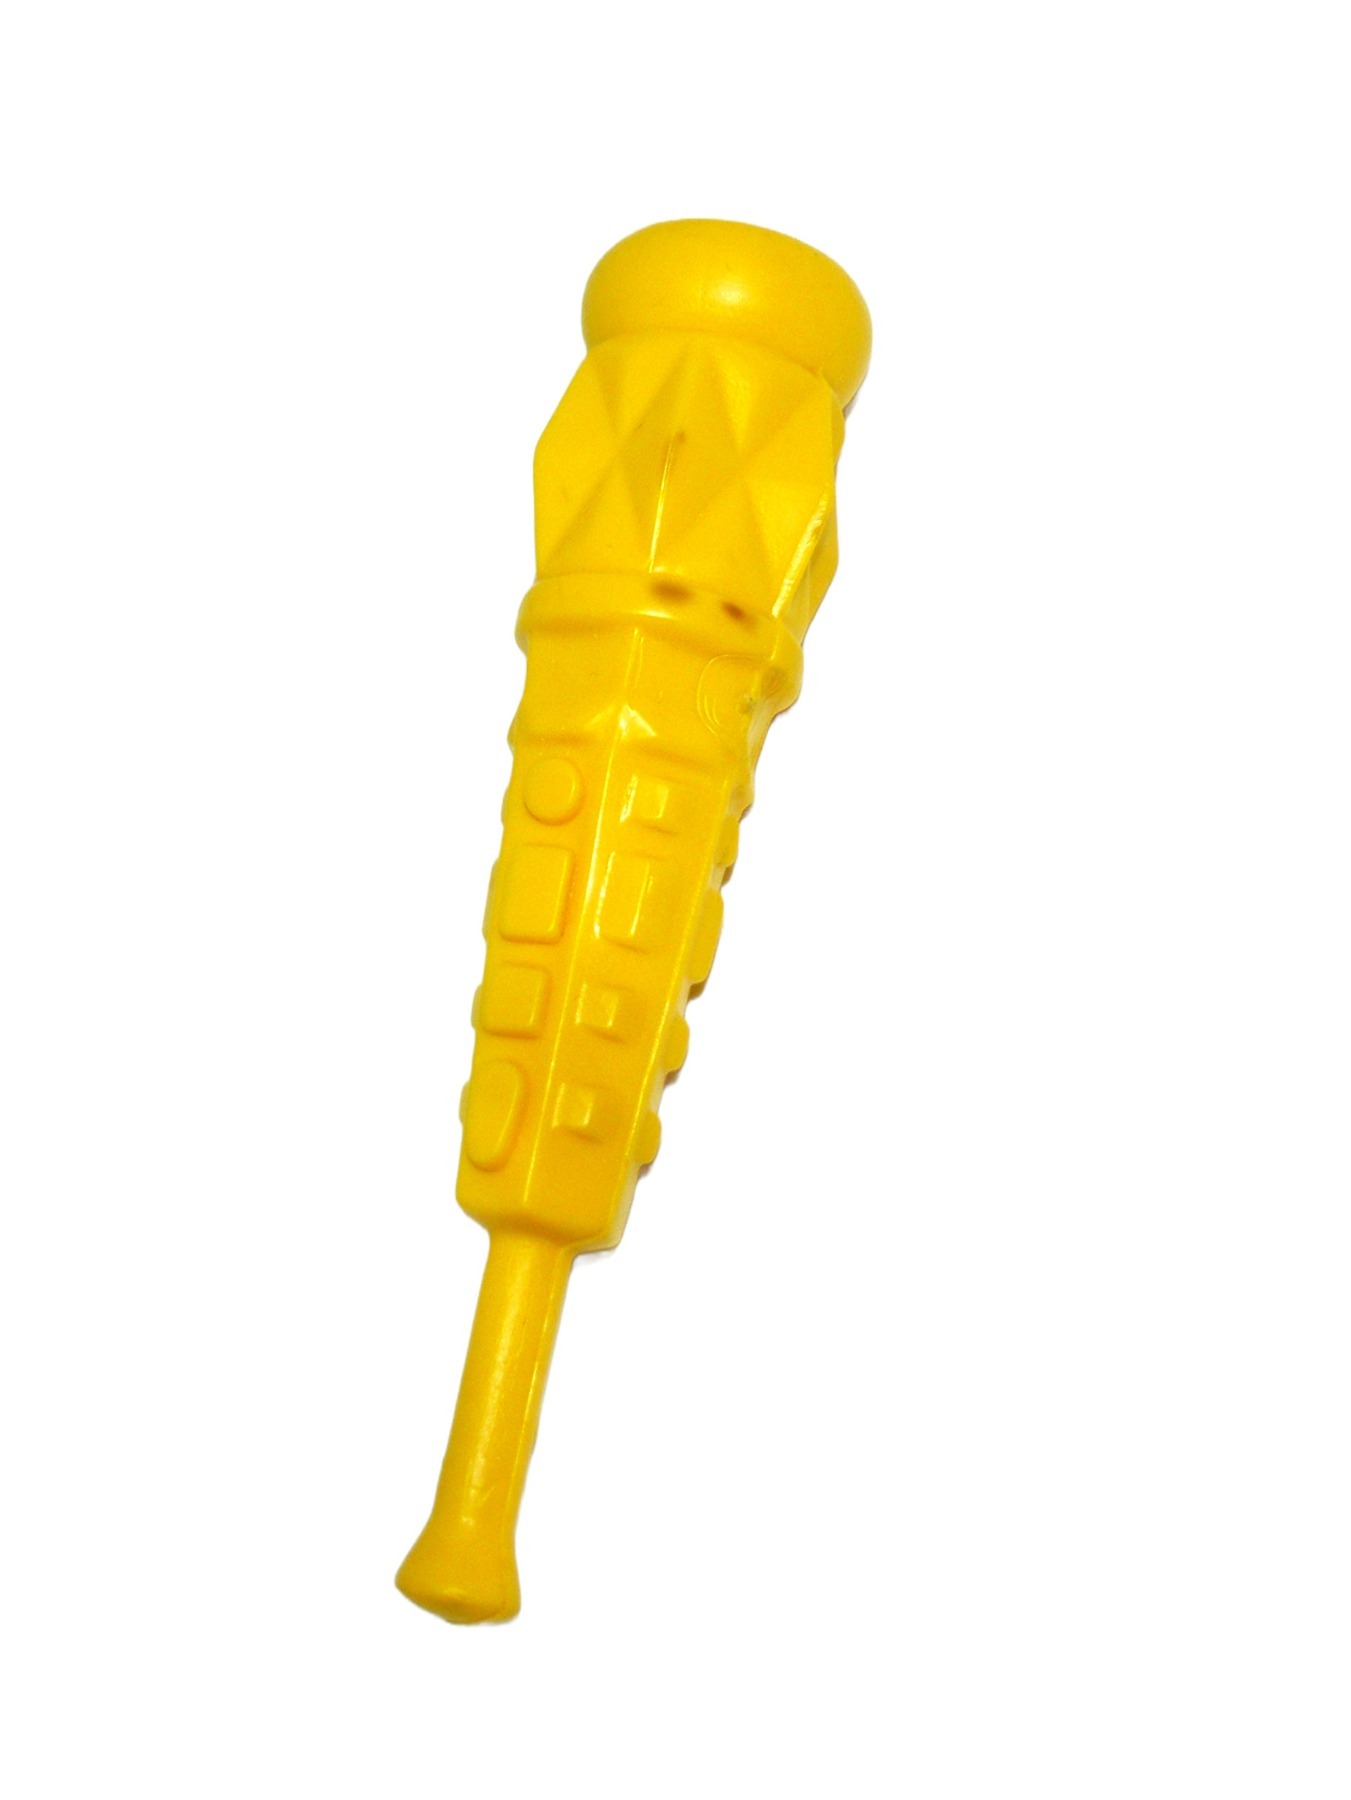 Mekaneck yellow stick / weapon